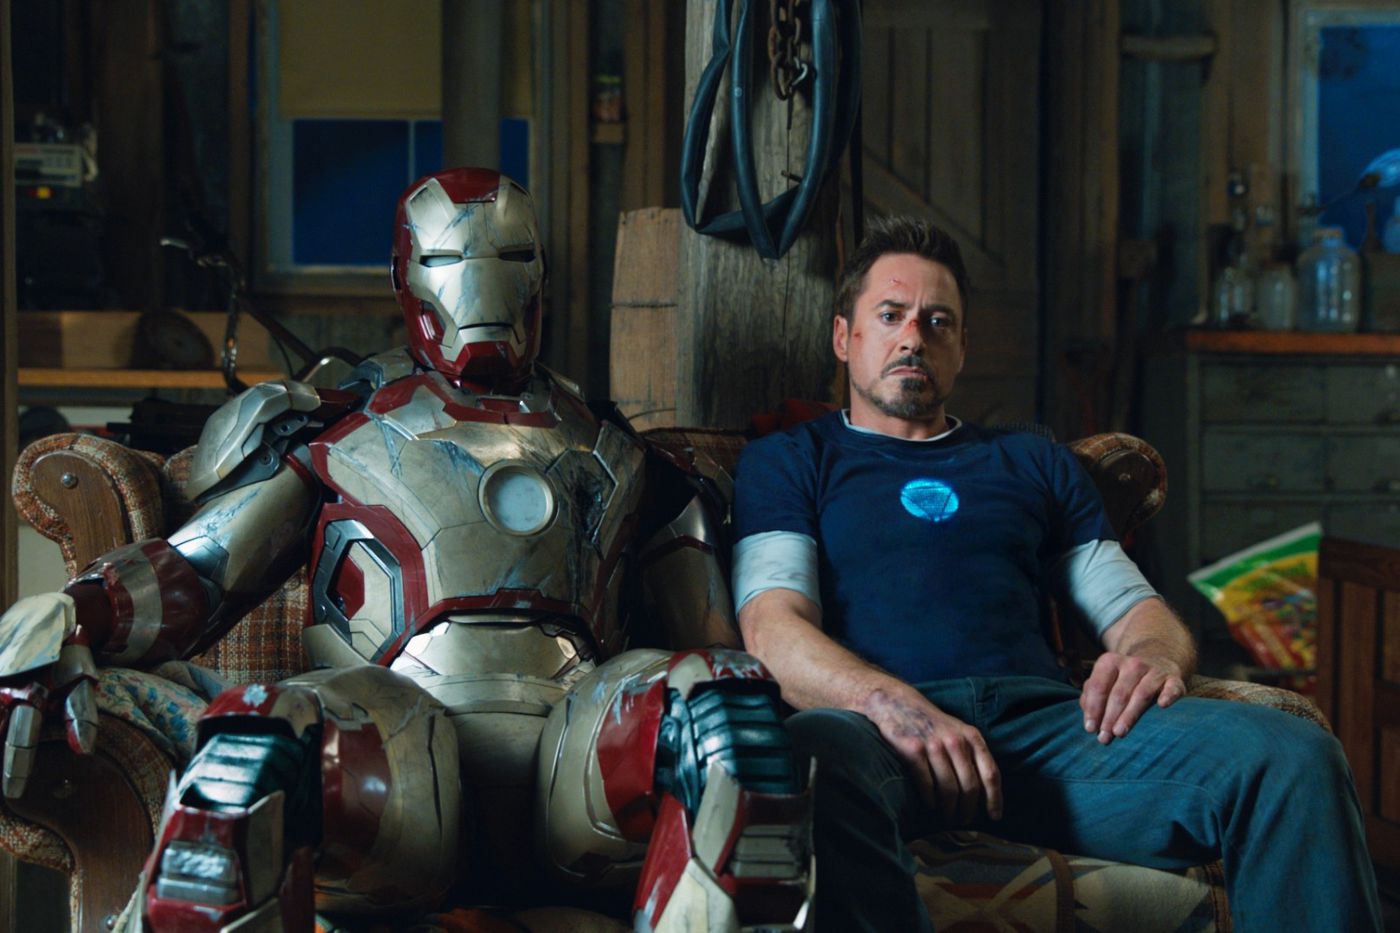 Robert Downey, Jr. as Tony Stark/Iron Man in "Iron Man" (2008)